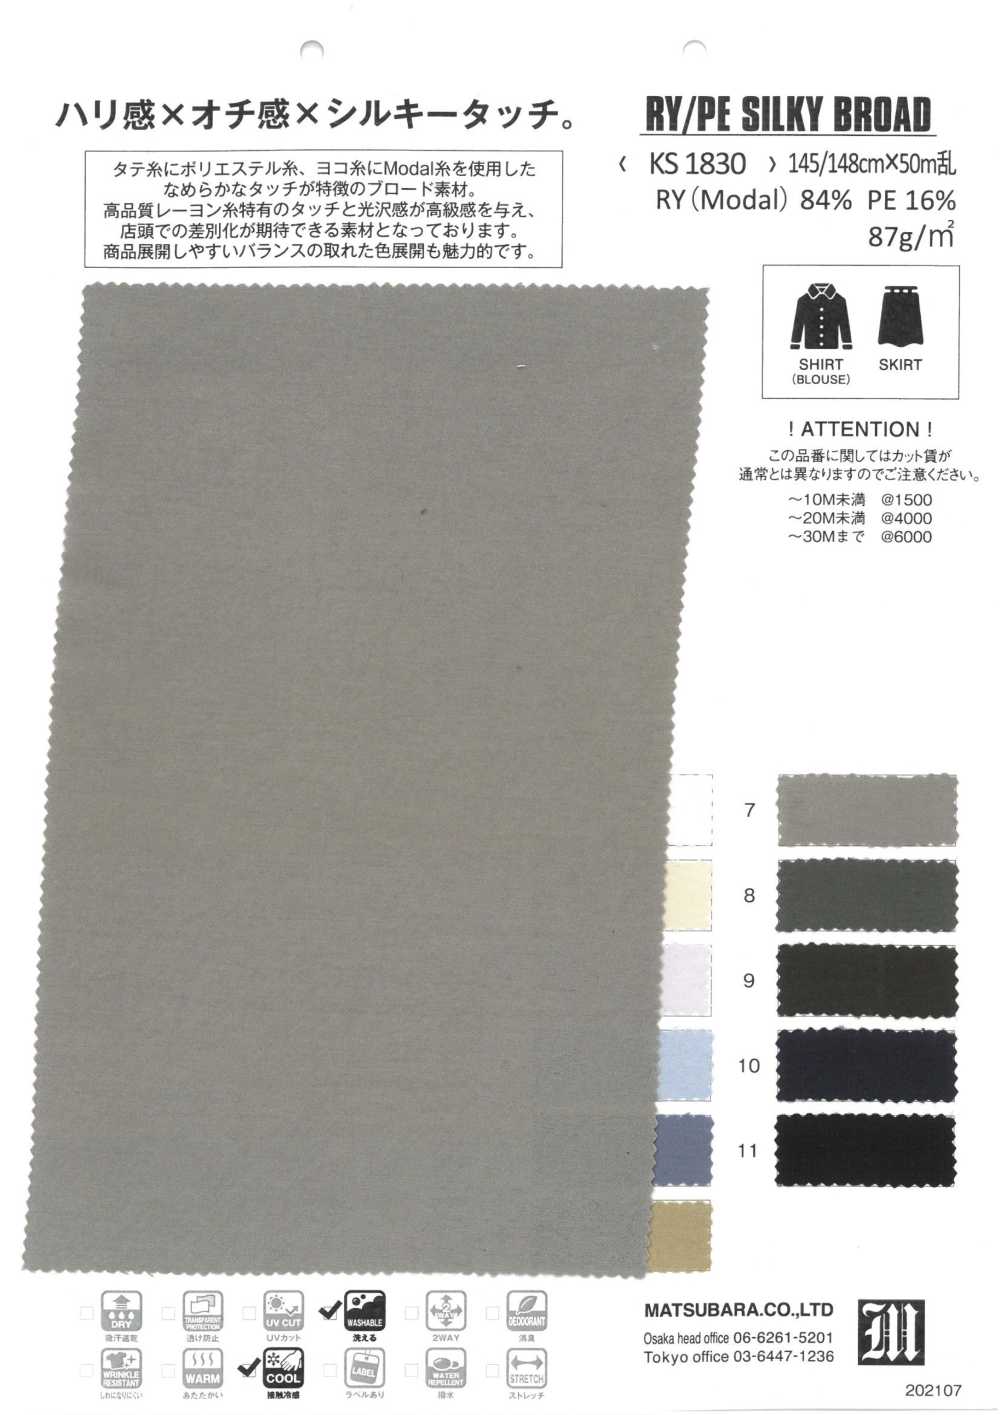 KS1830 RY/PE SEDOSO ANCHO[Fabrica Textil] Matsubara